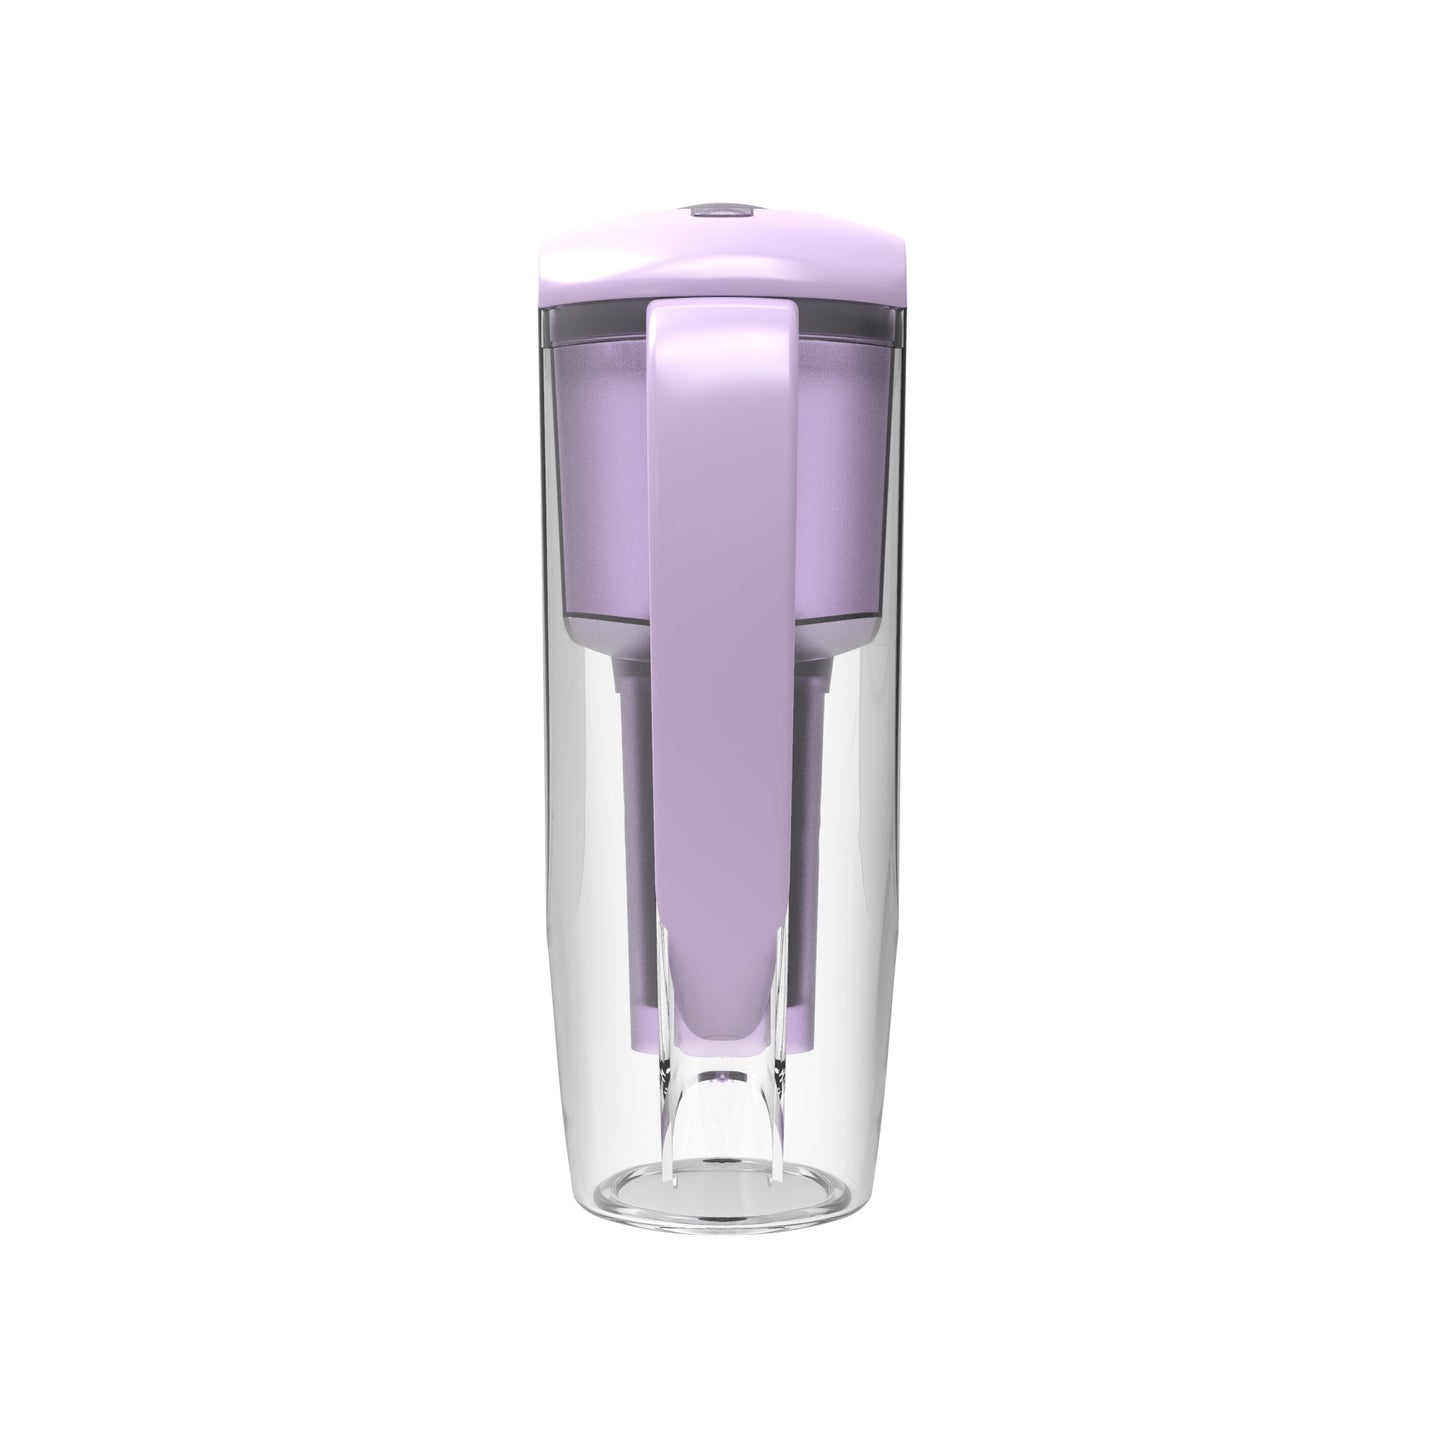 Drinkpod Alkaline Water Filter Pitcher, 8-Stage Cartridge 2.5L by Drinkpod